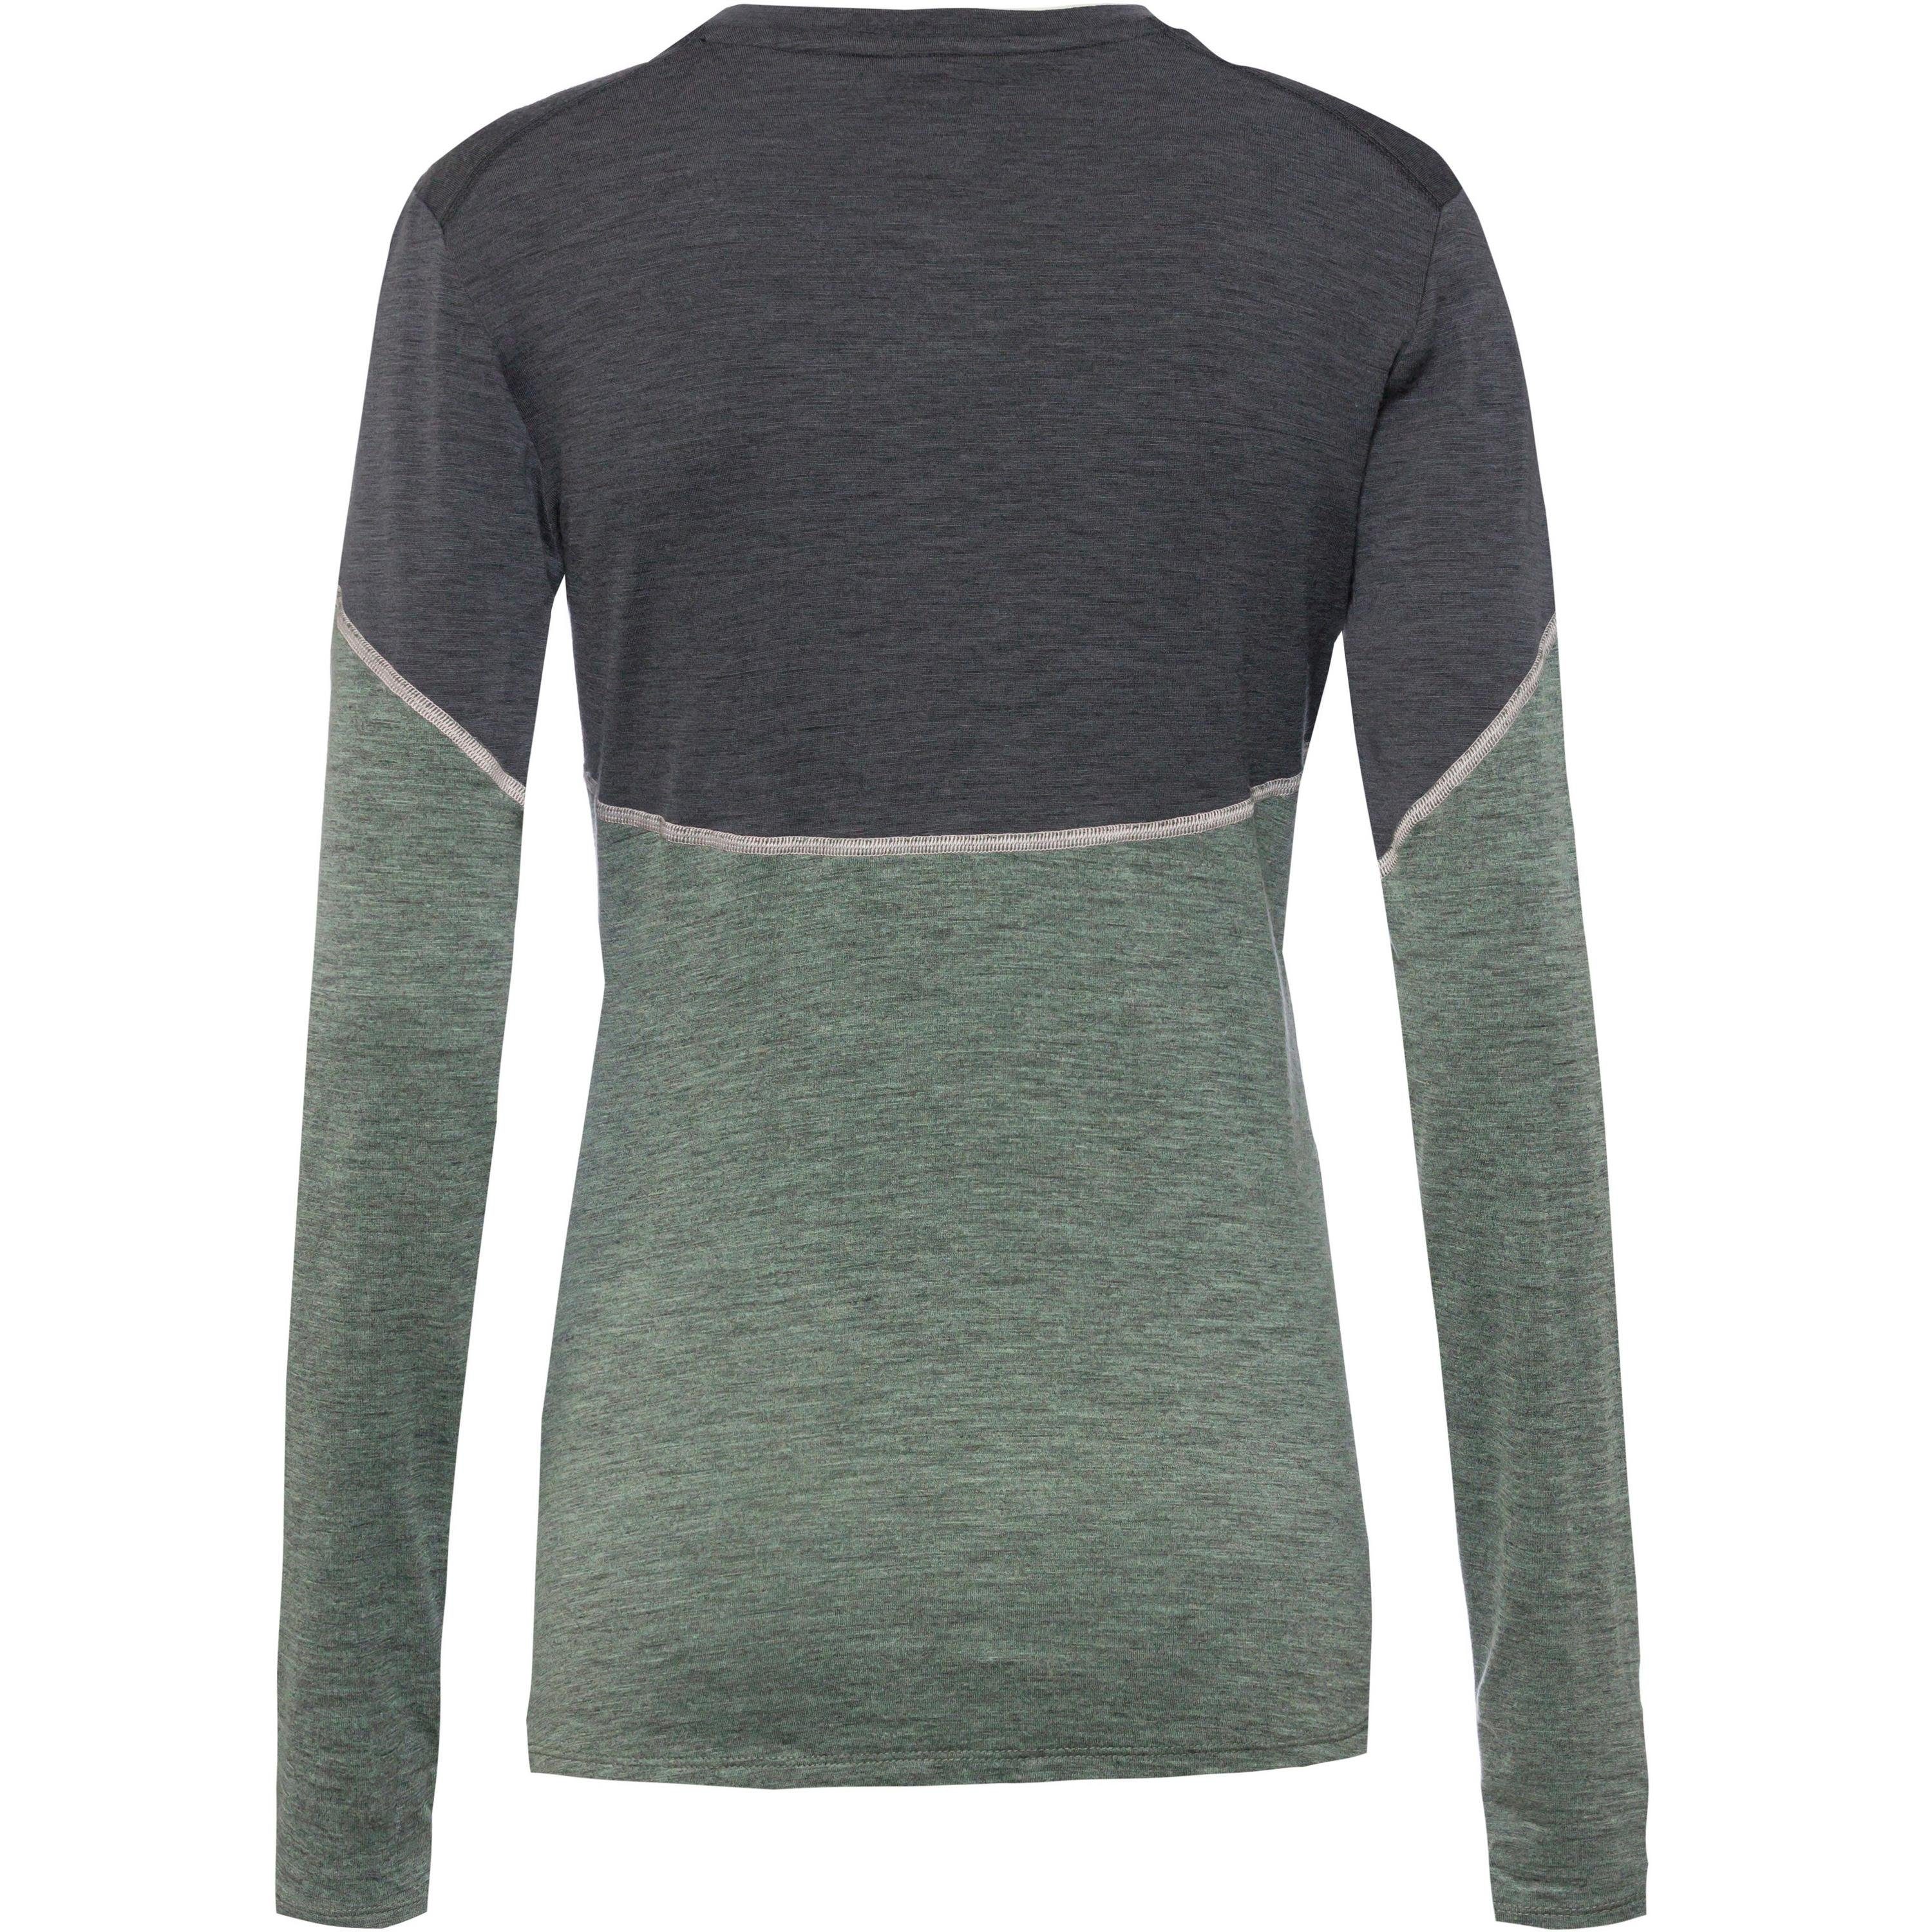 grey Revelstoke 150 Funktionsshirt Odlo green-dark matte Wool melange Performance